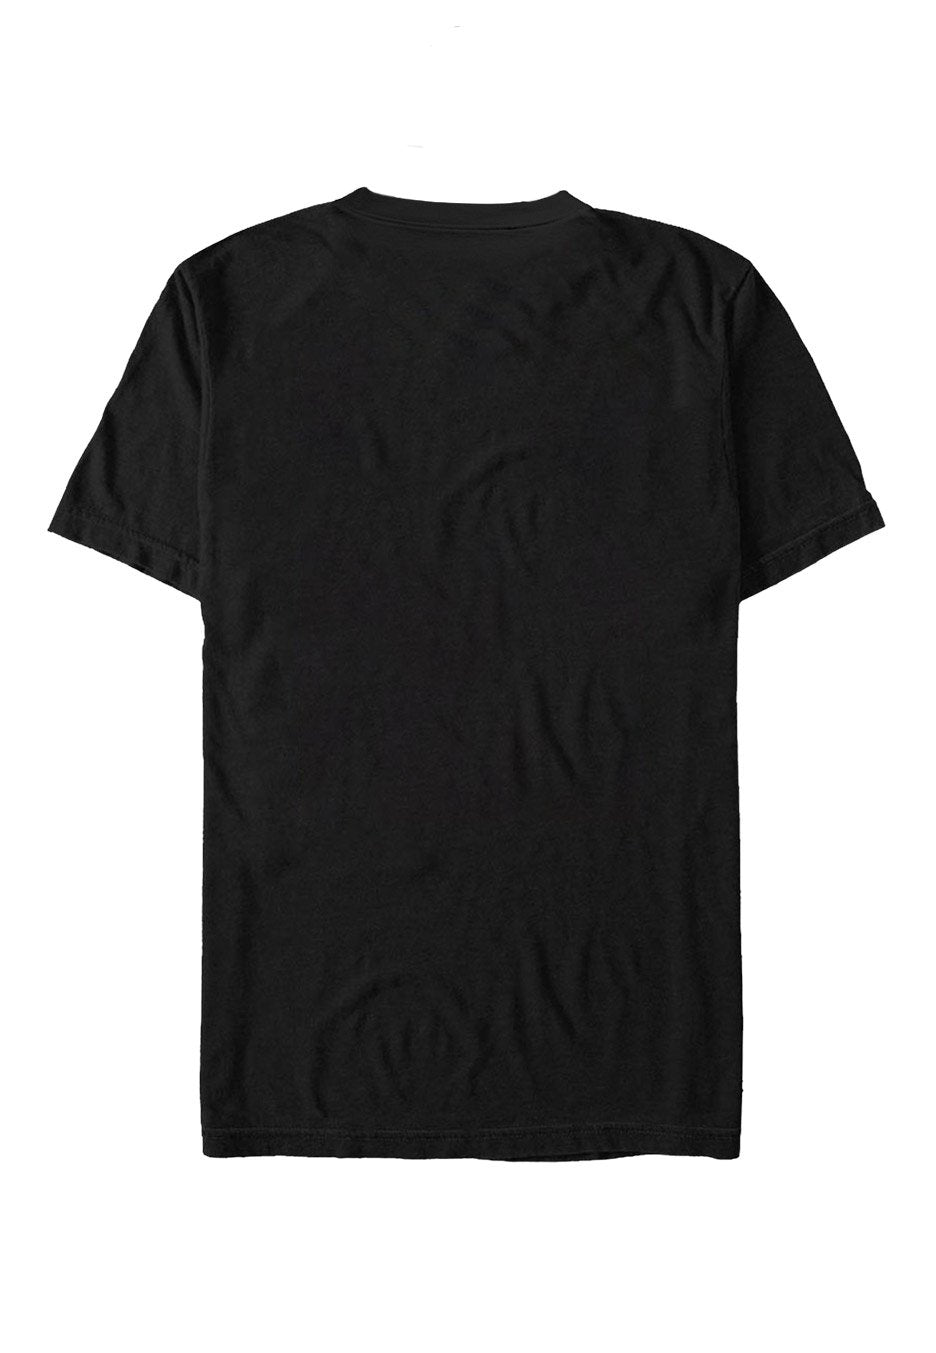 Deftones - Worldwide - T-Shirt